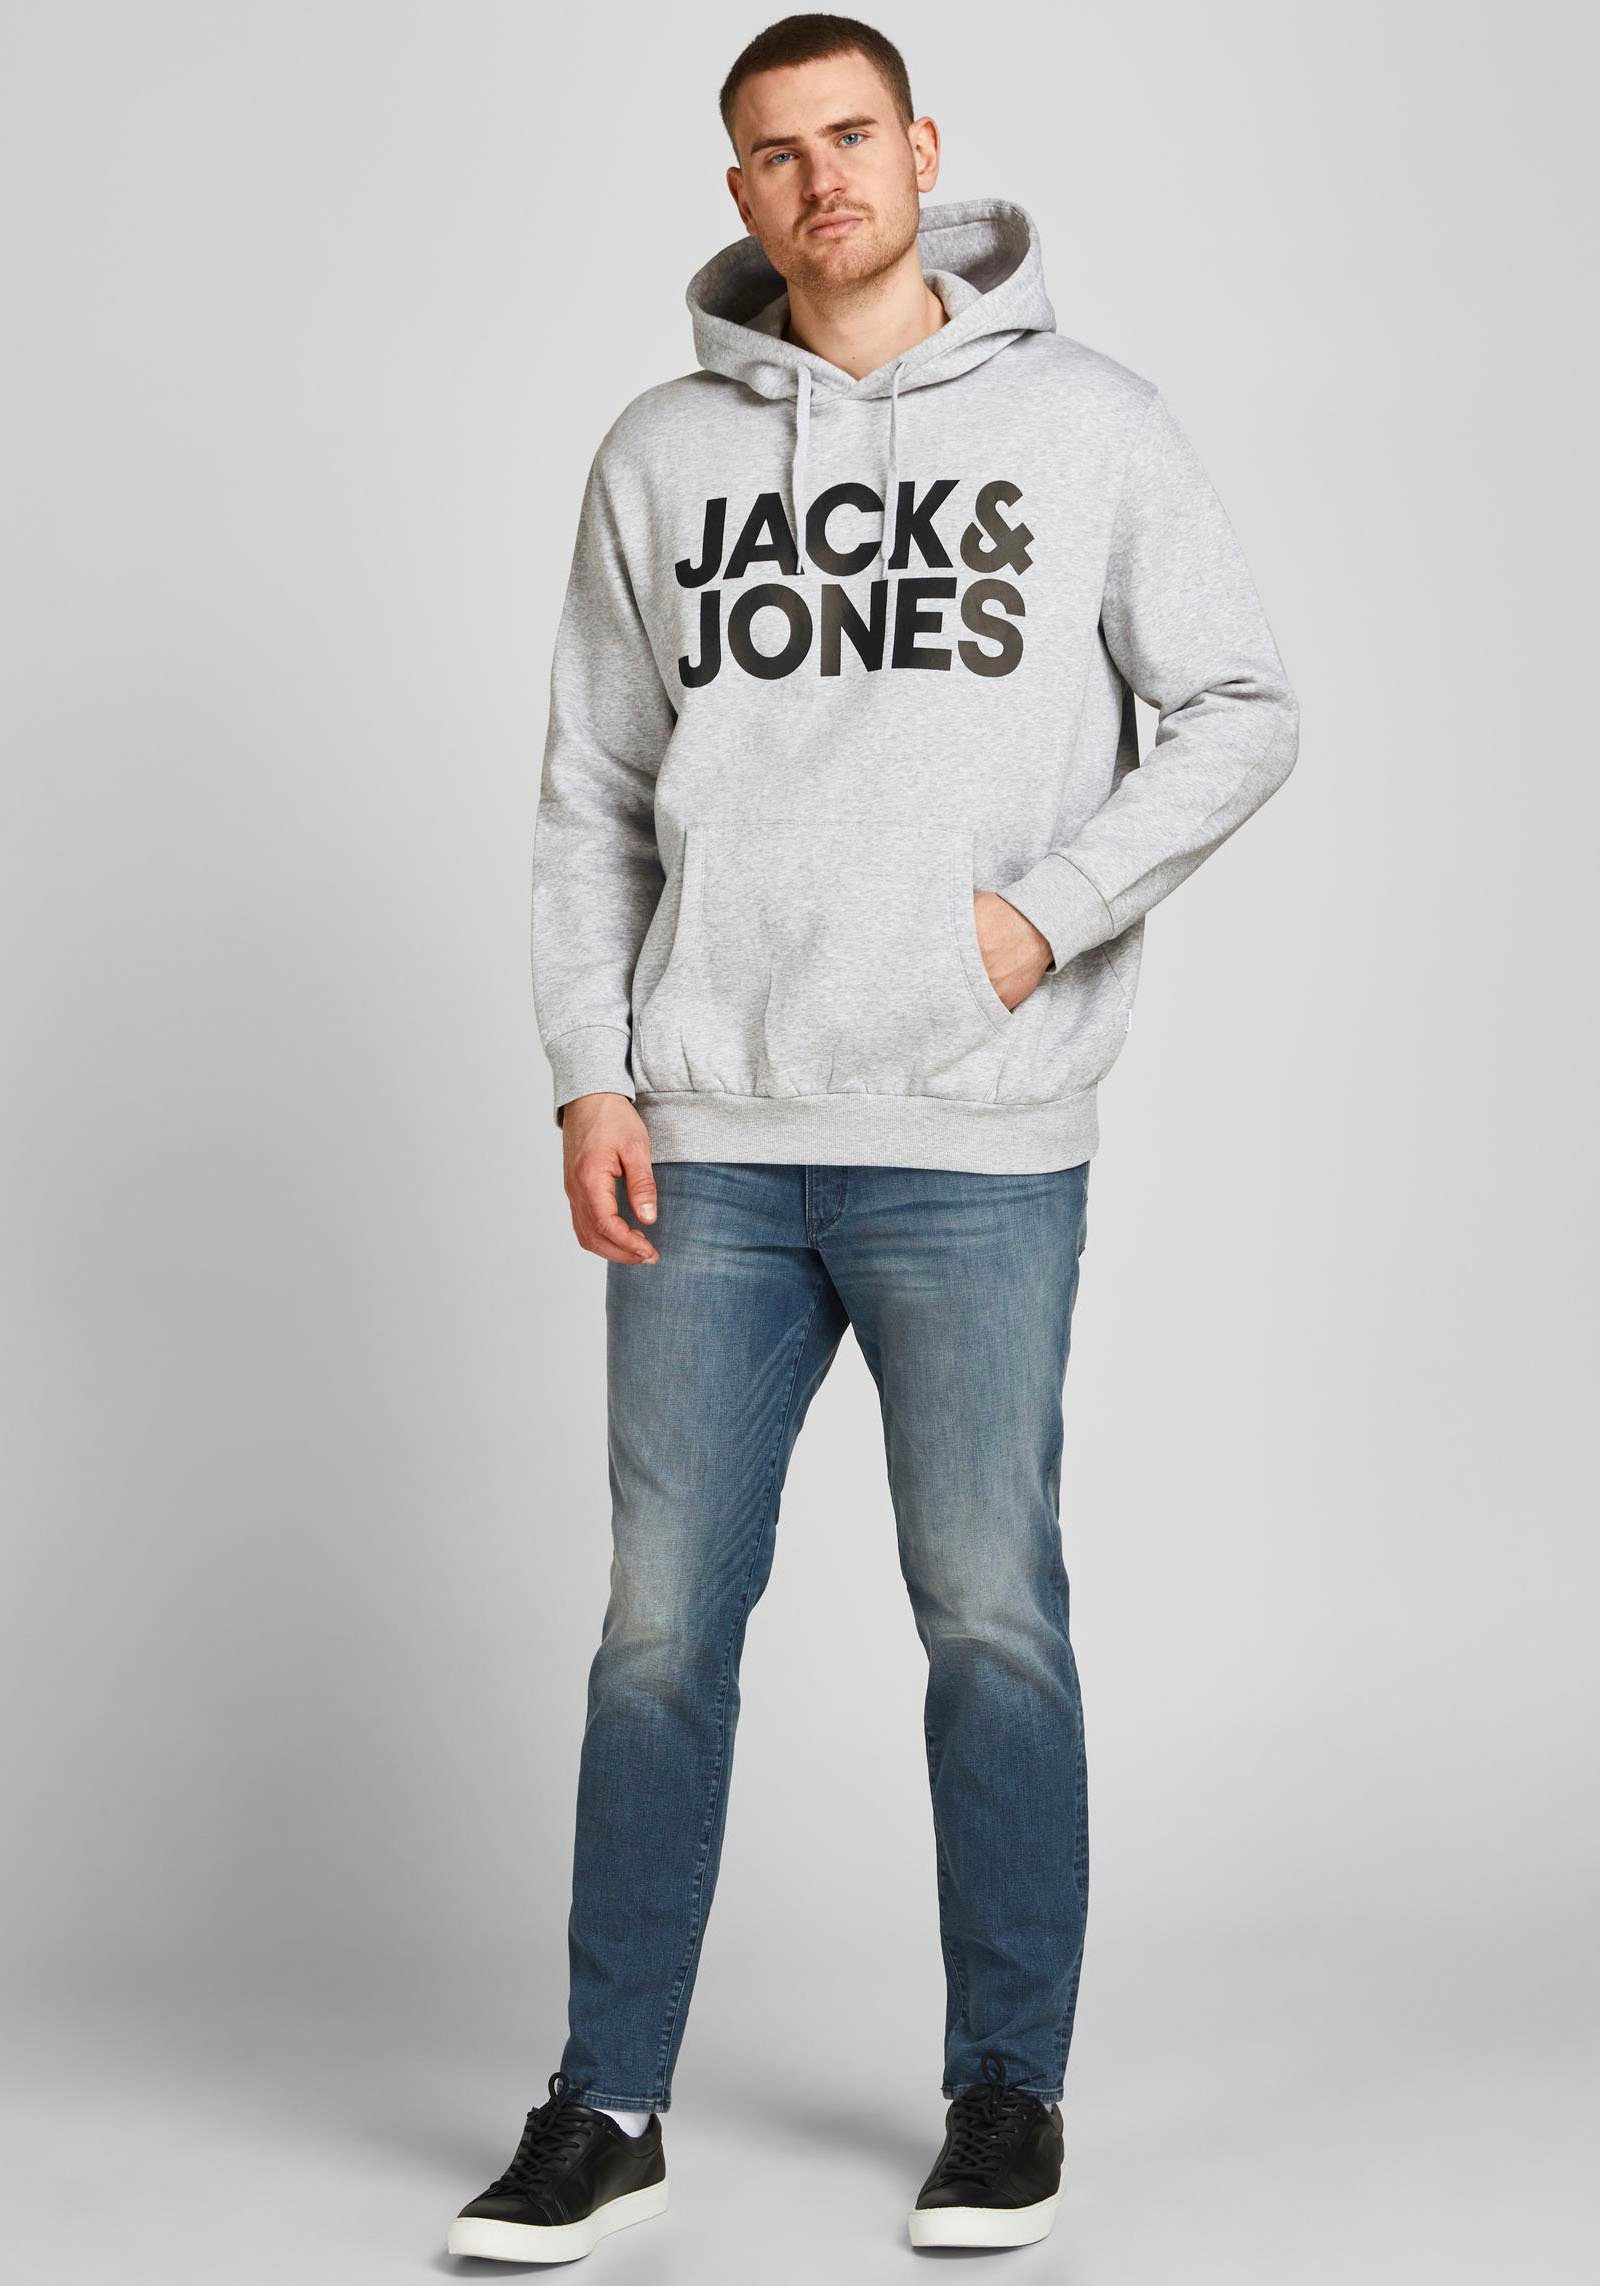 Jack & Jones PlusSize Bis CORP 6XL Größe LOGO SWEAT Kapuzensweatshirt HOOD hellgrau-meliert